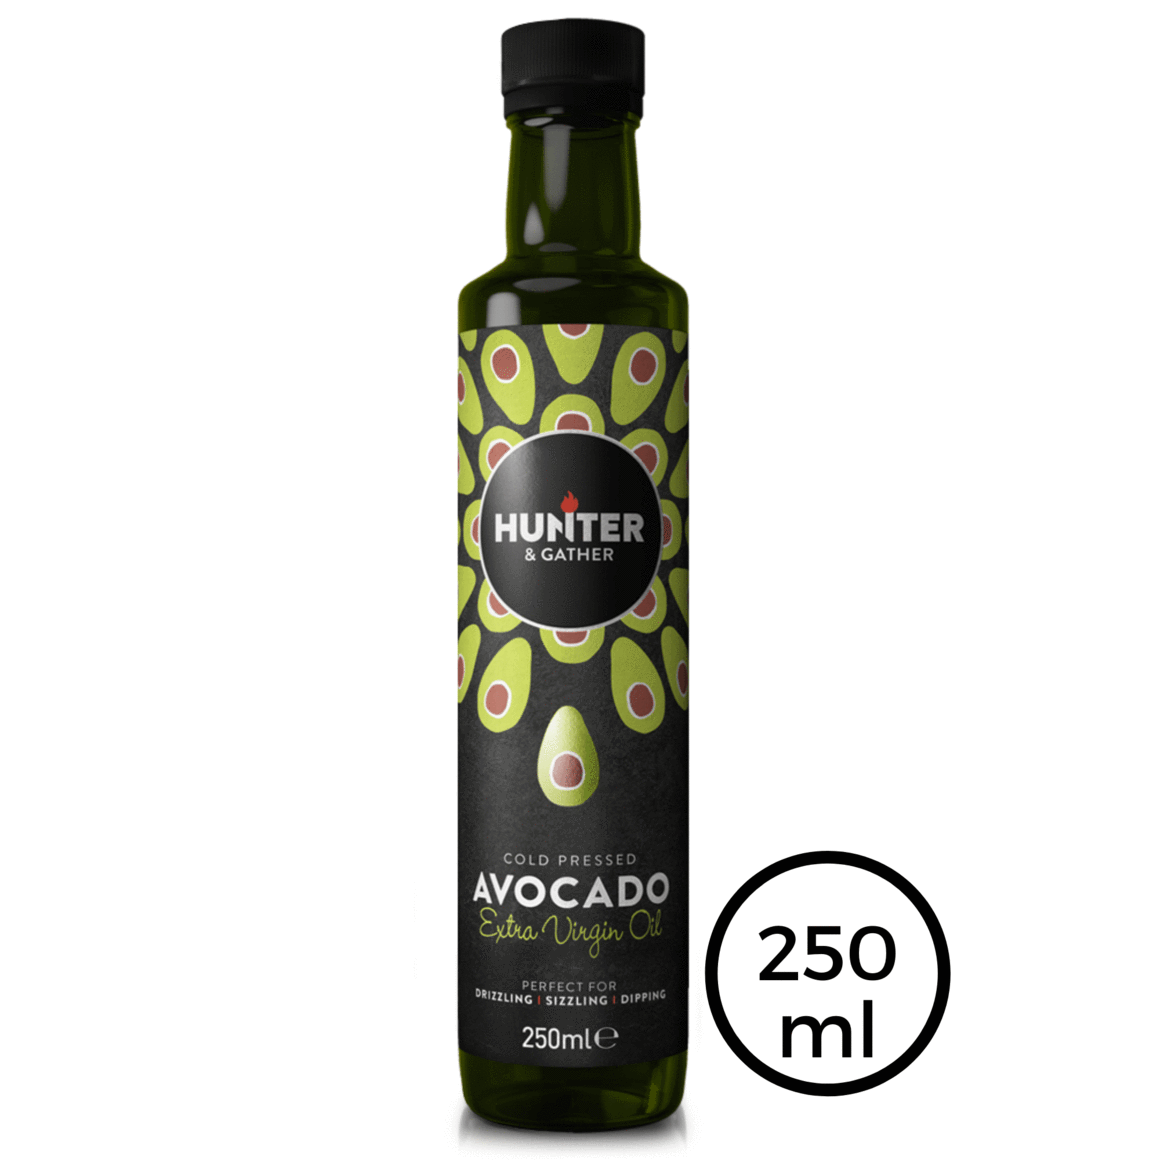 Cold Pressed Extra Virgin Avocado Oil - 250ml